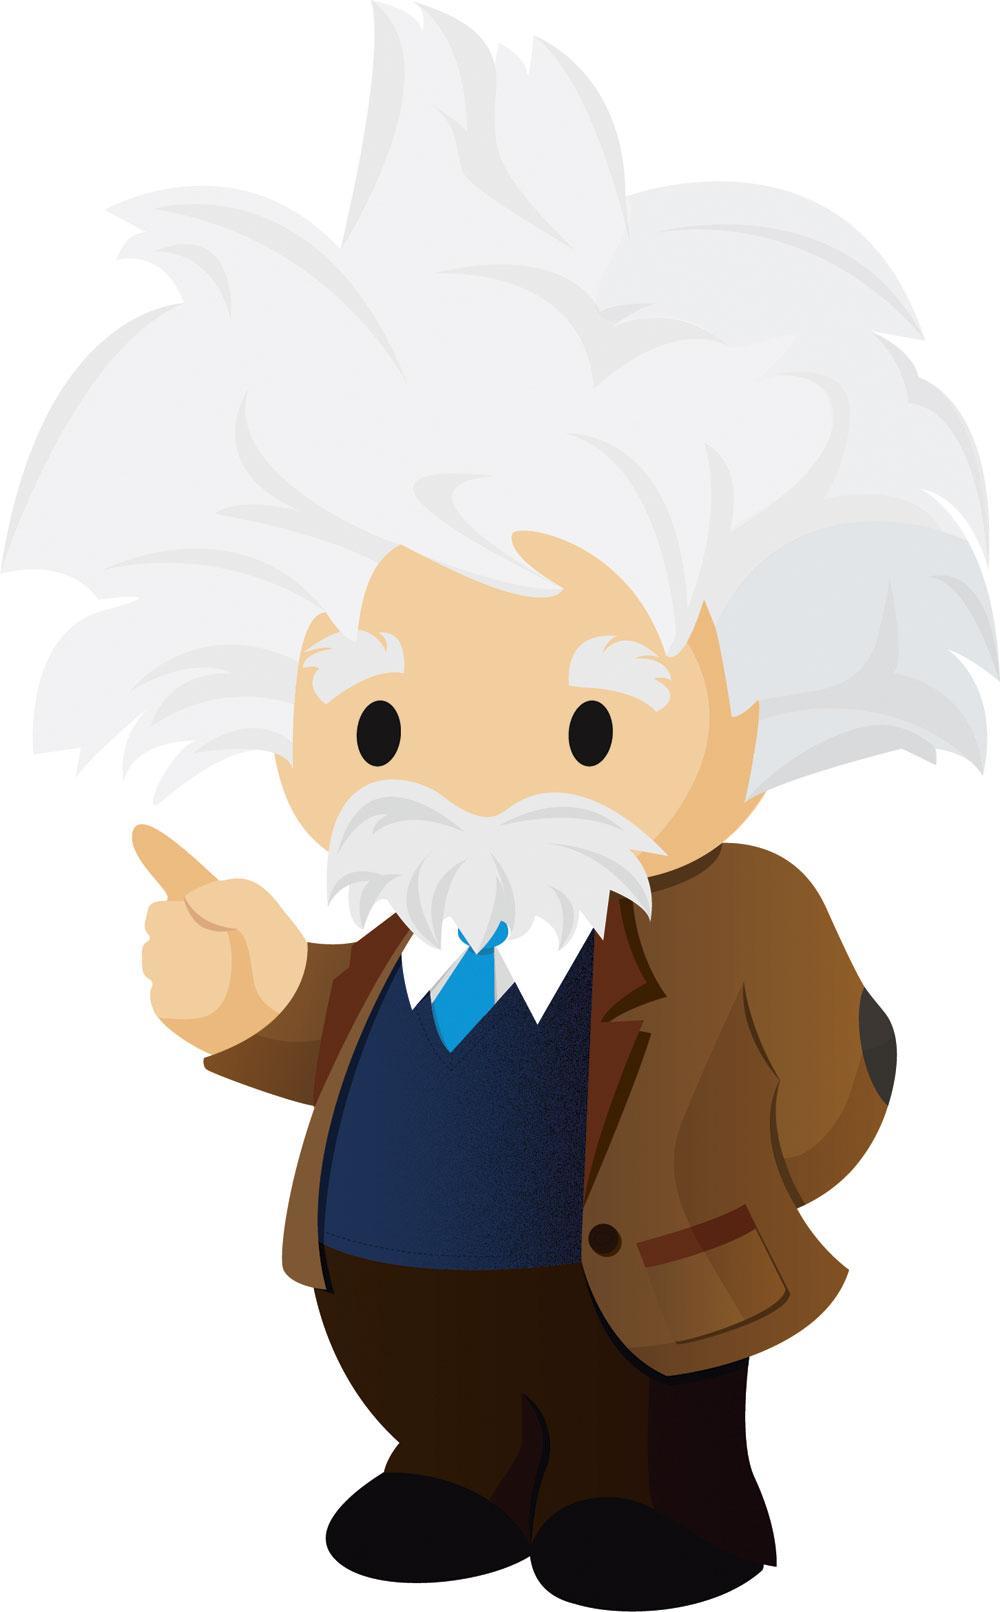 Einstein retrouve la parole grâce à Siri 